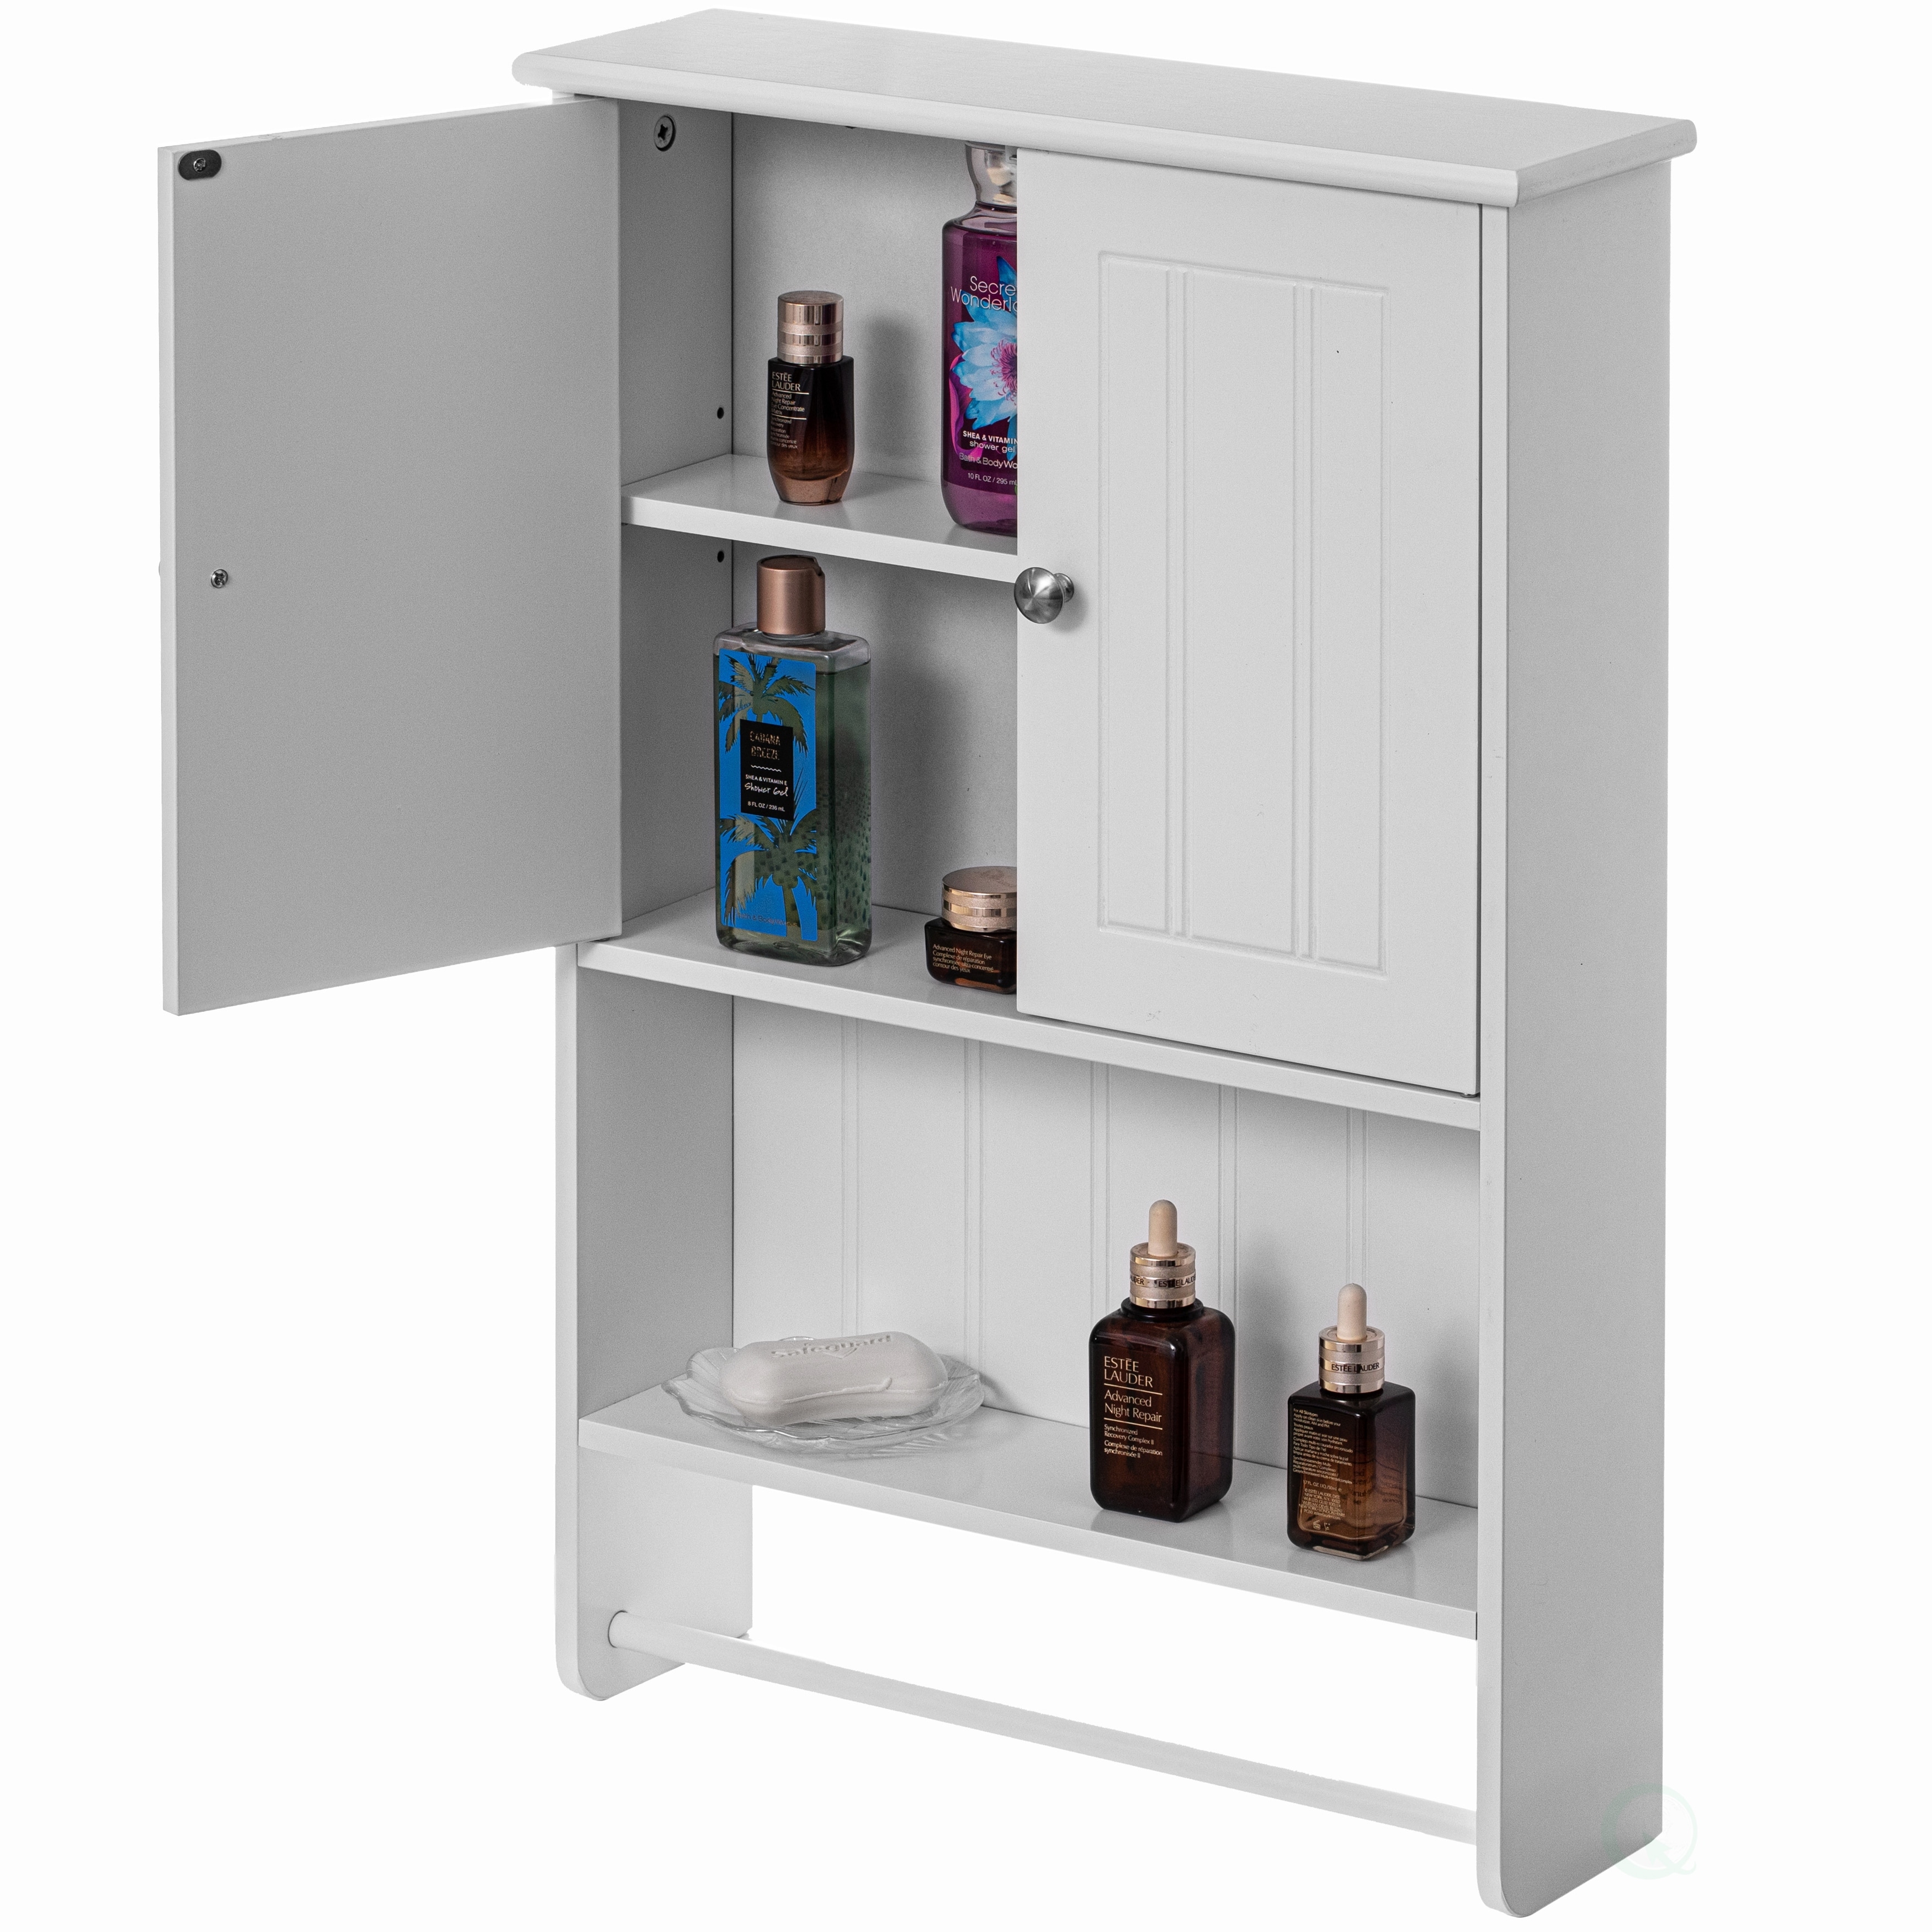 https://ak1.ostkcdn.com/images/products/is/images/direct/12b5d2d1973ce2abfb2a1be8eb900a56bcf4184c/Wall-Mount-Bathroom-Cabinet-Wooden-Medicine-Cabinet-Storage-Organizer-Double-Door-Open-Display-Shelf%2C-with-Towel-Bar.jpg